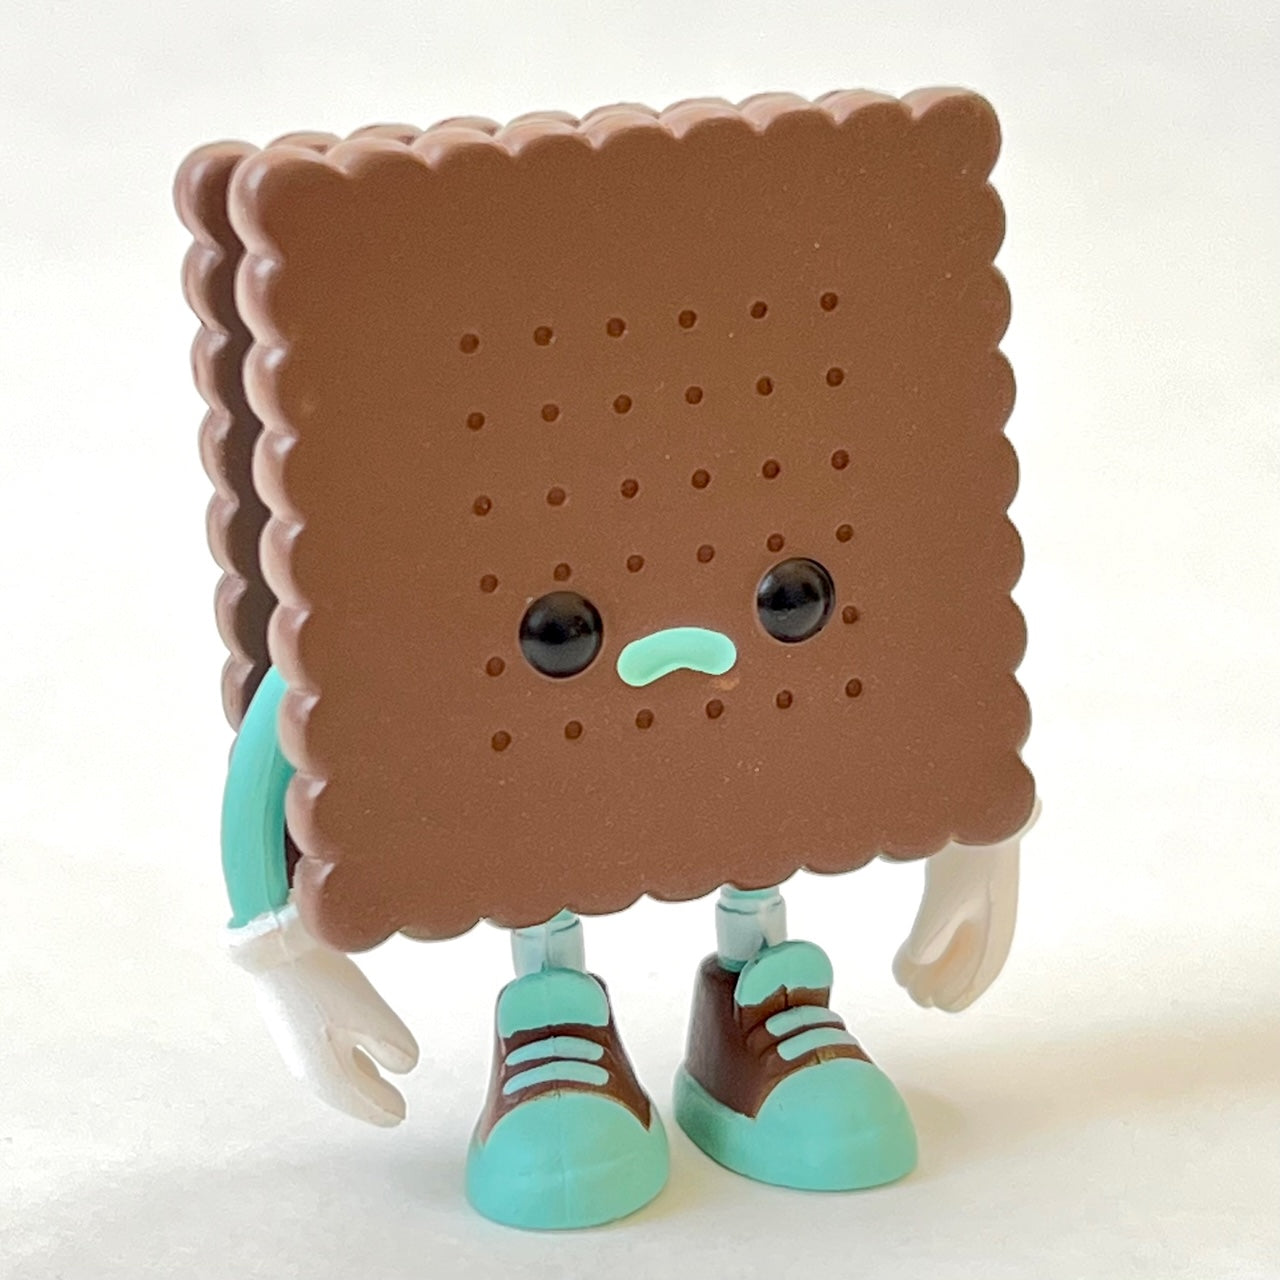 X 70221 Cream Biscuit Buddy Figurine Capsule-DISCONTINUED